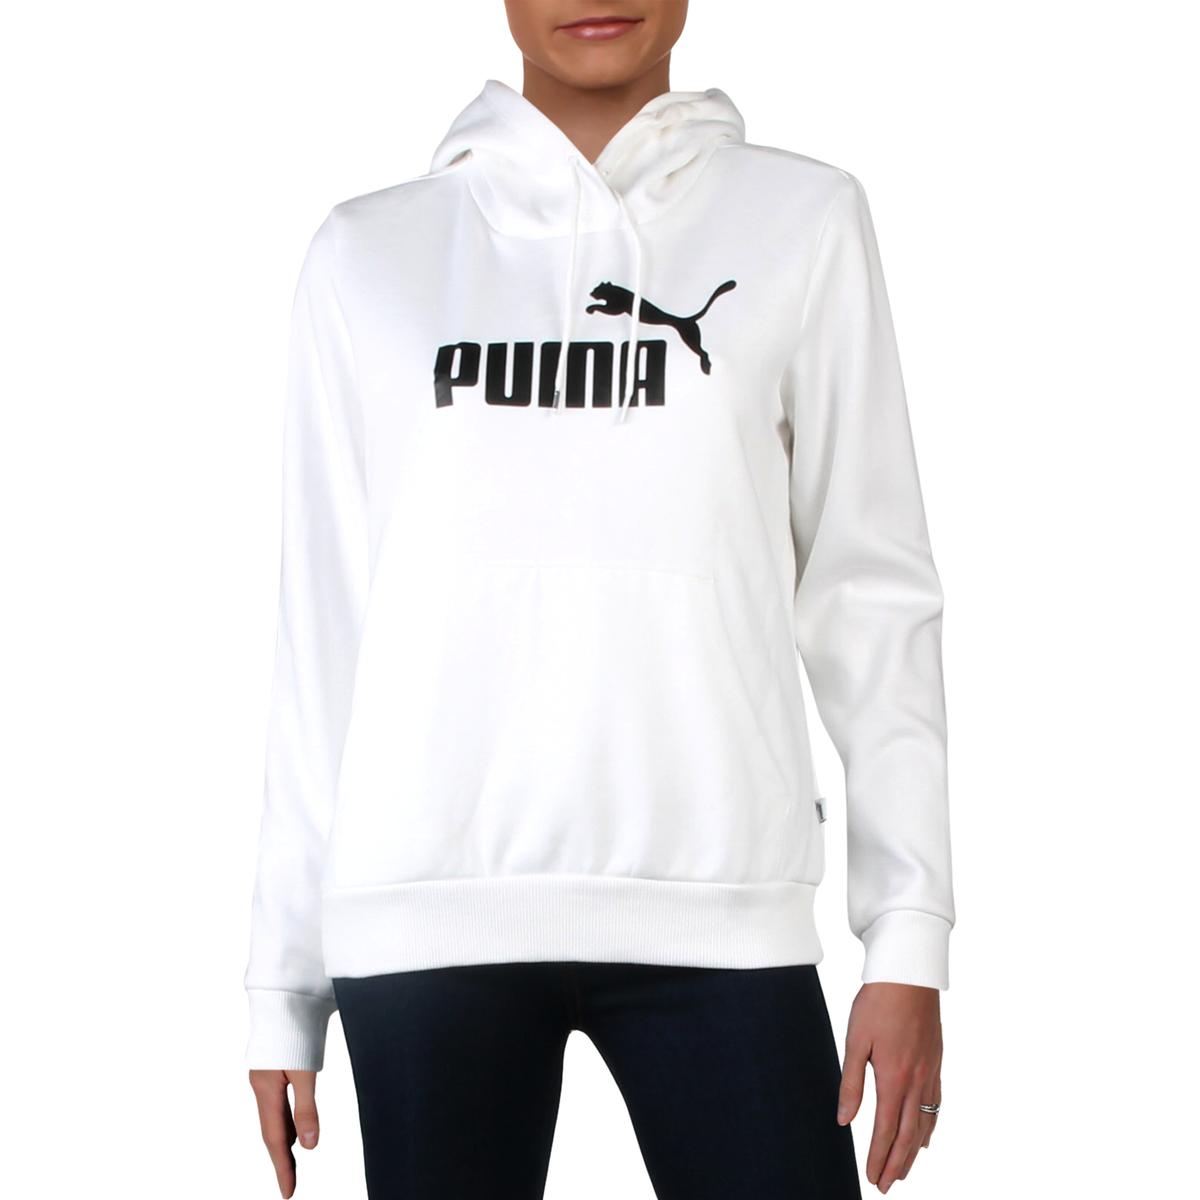 Puma Womens White Sweatshirt Fitness Running Hoodie Athletic L BHFO ...